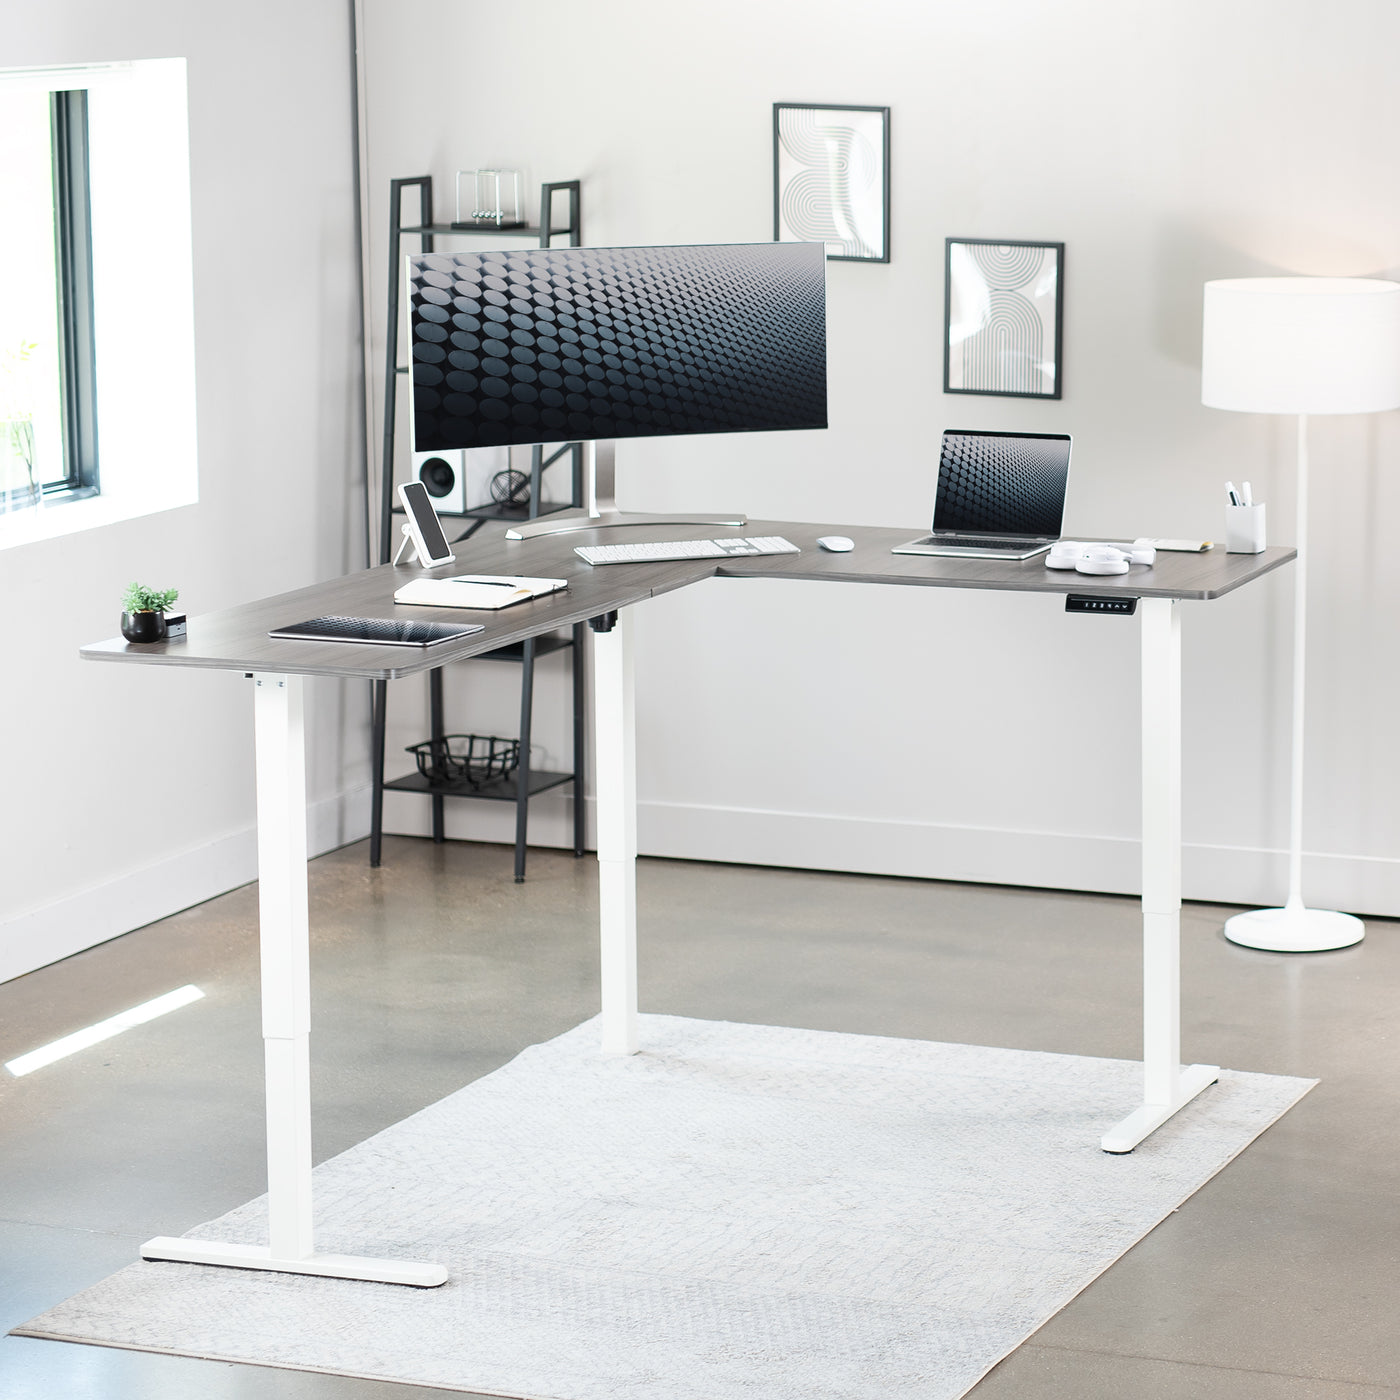 Electric heavy-duty corner desk workstation for modern office workspaces.